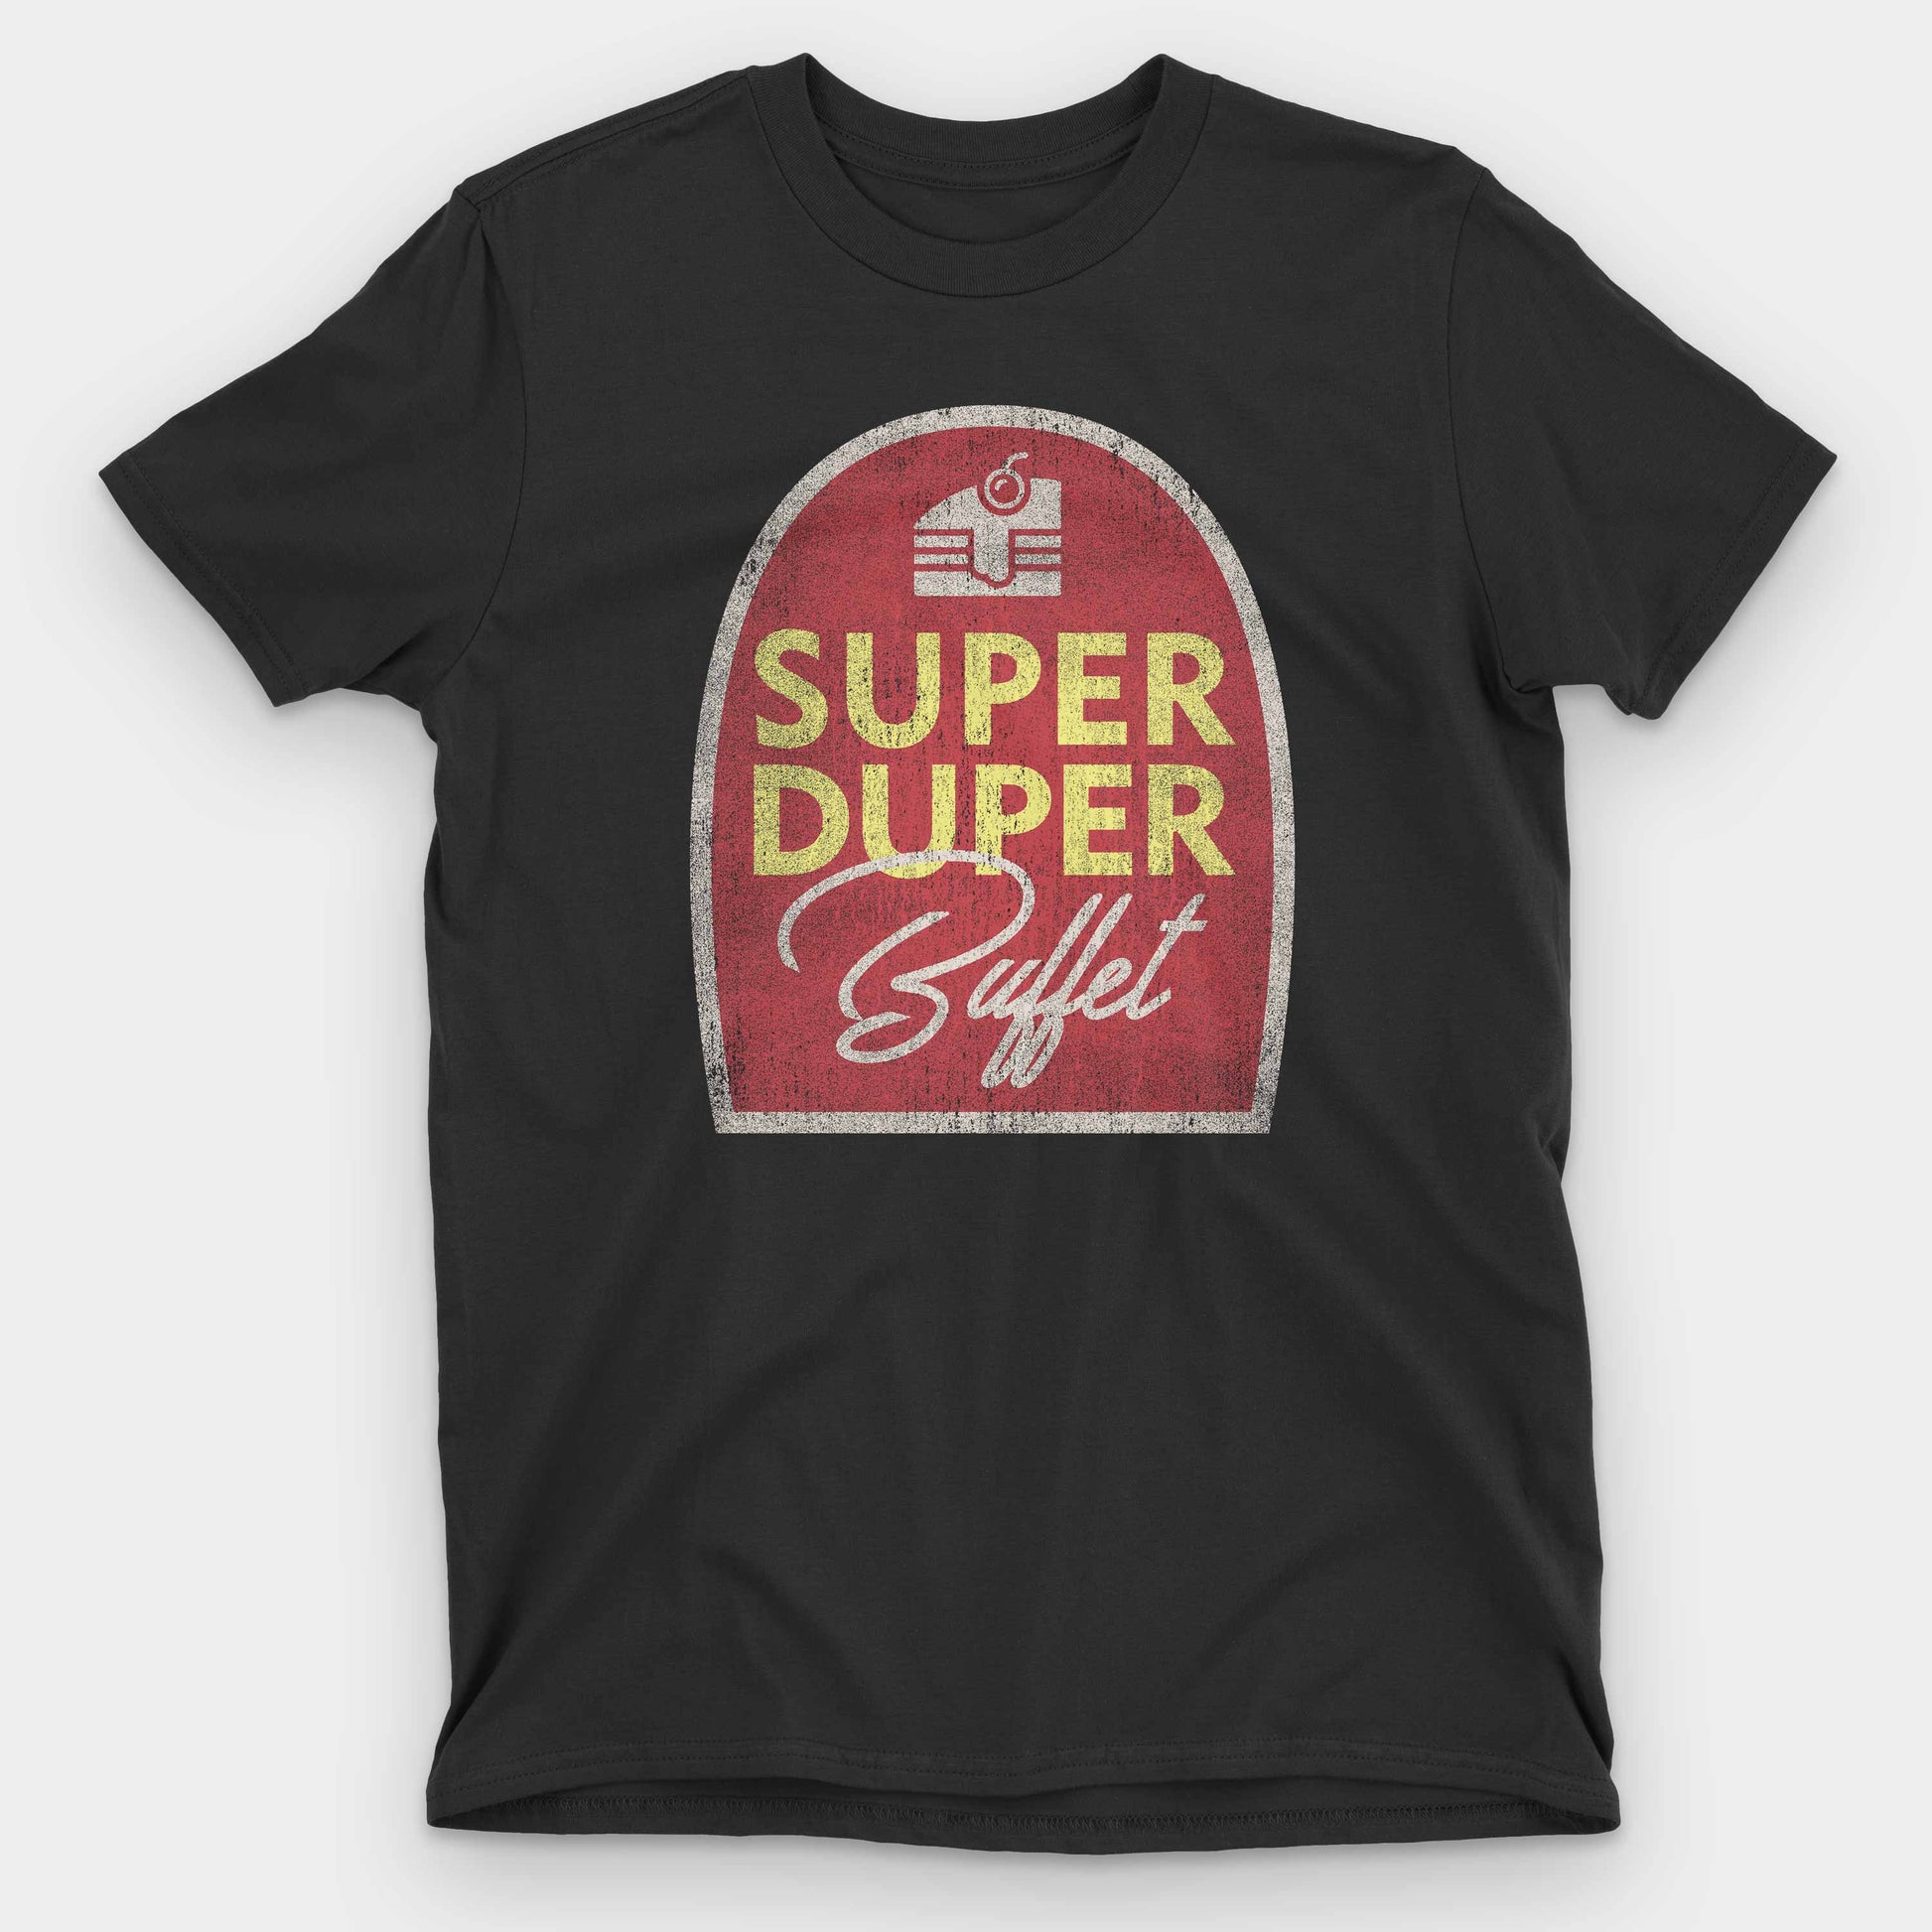 Black Super Duper Buffet Graphic T-Shirt by Snaxtime